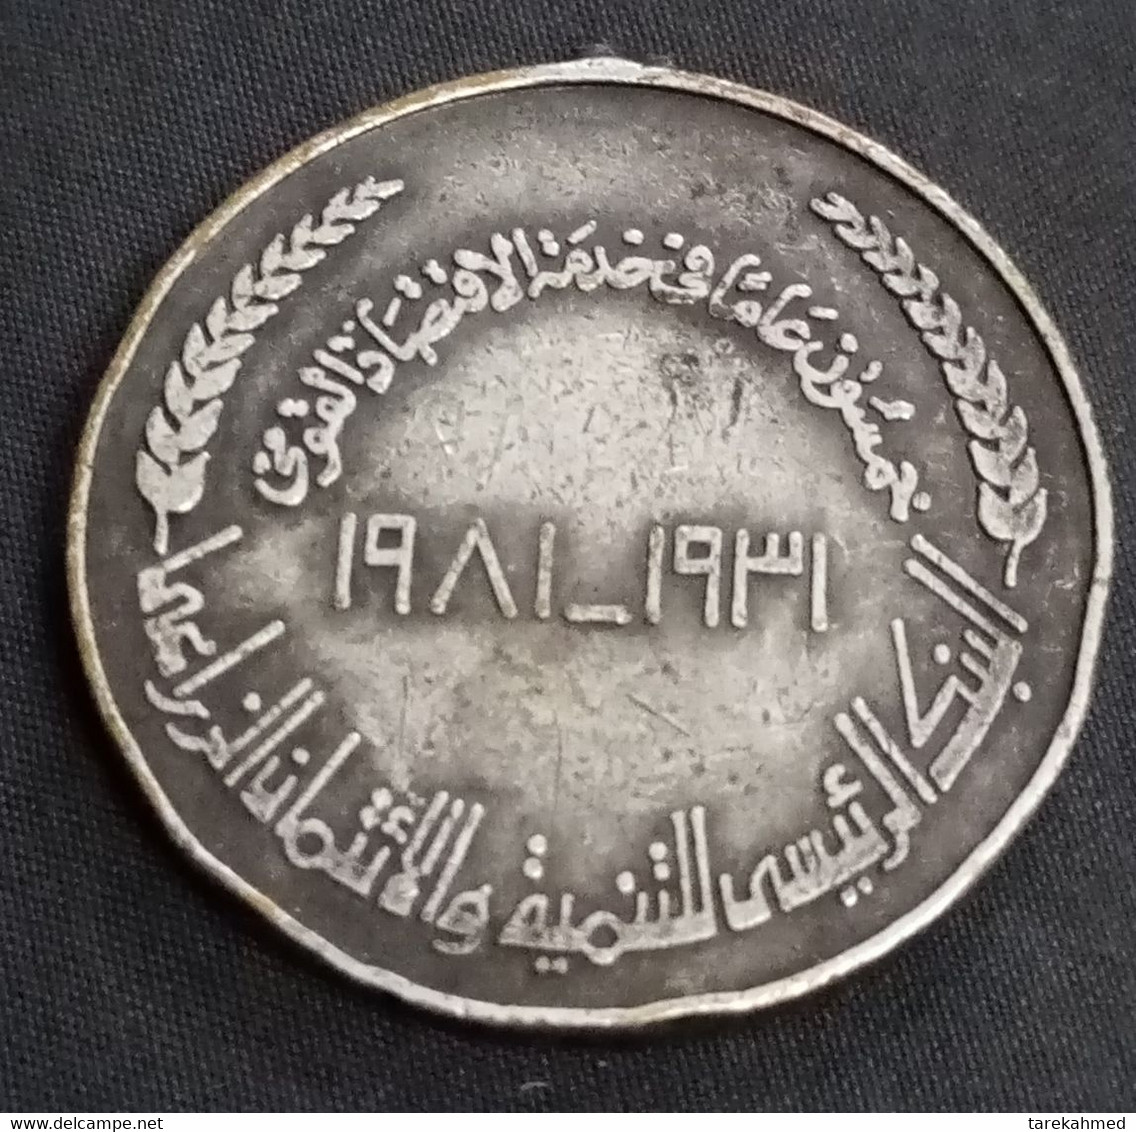 Egypt 1981 , Medal Of Principal Bank For Development & Agricultural , Tokbag - Gewerbliche